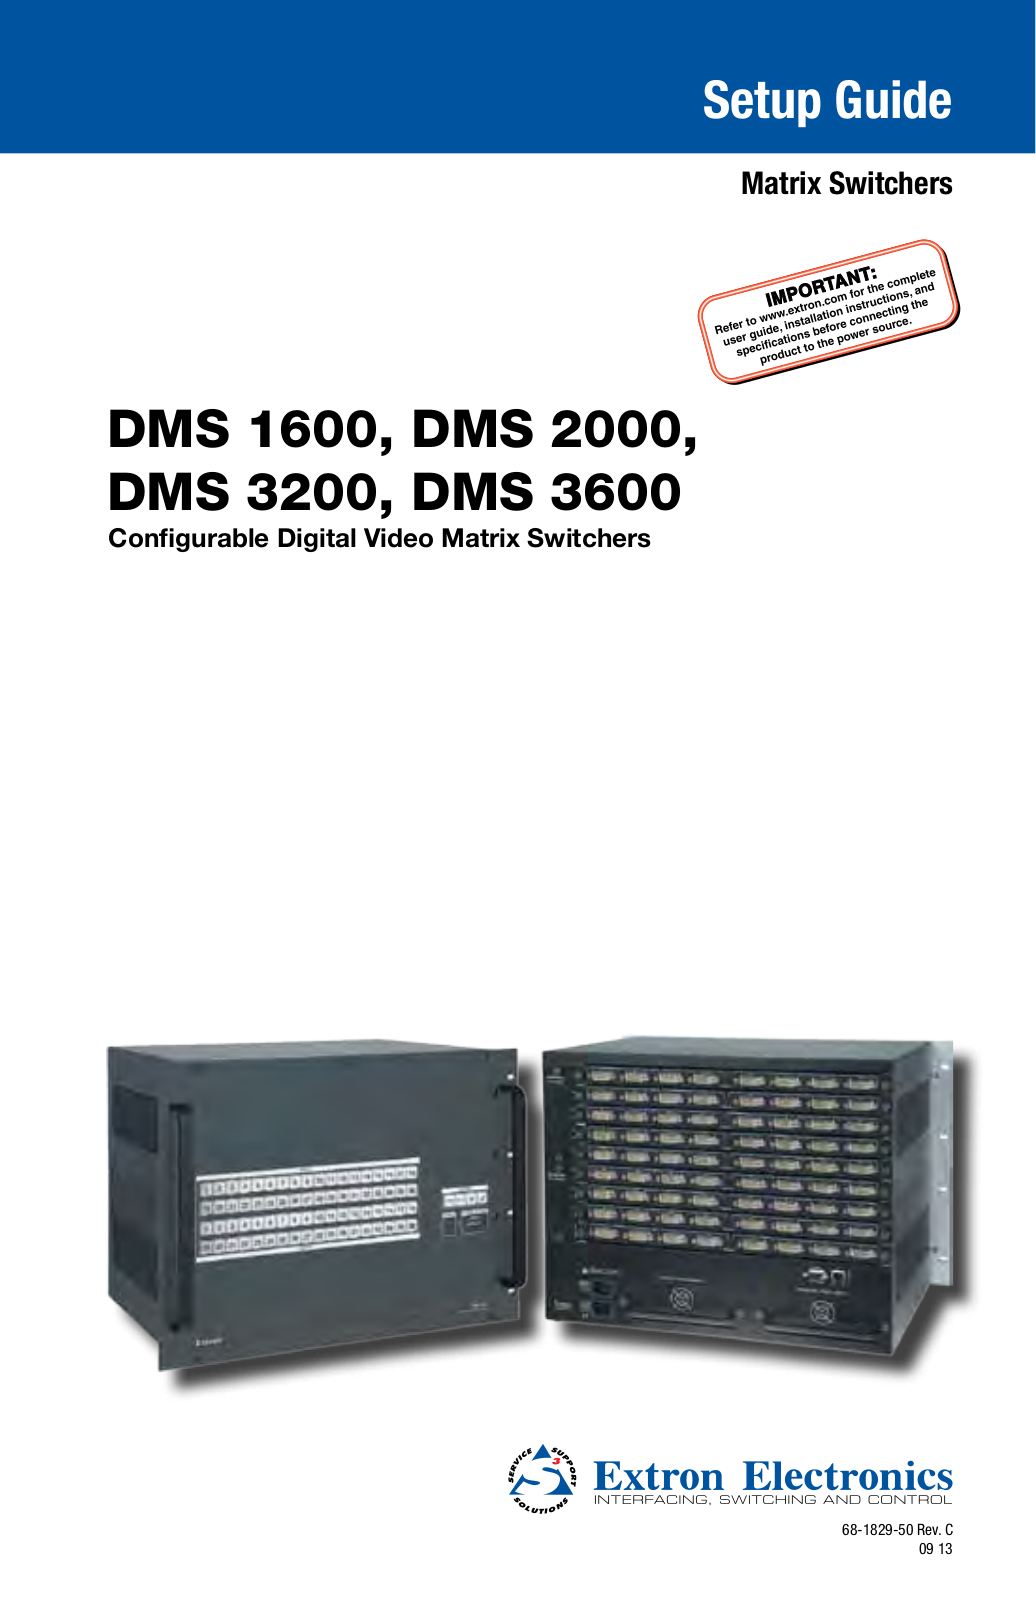 Extron electronic DMS 2000, DMS 3200, DMS 3600, DMS 1600 User Manual